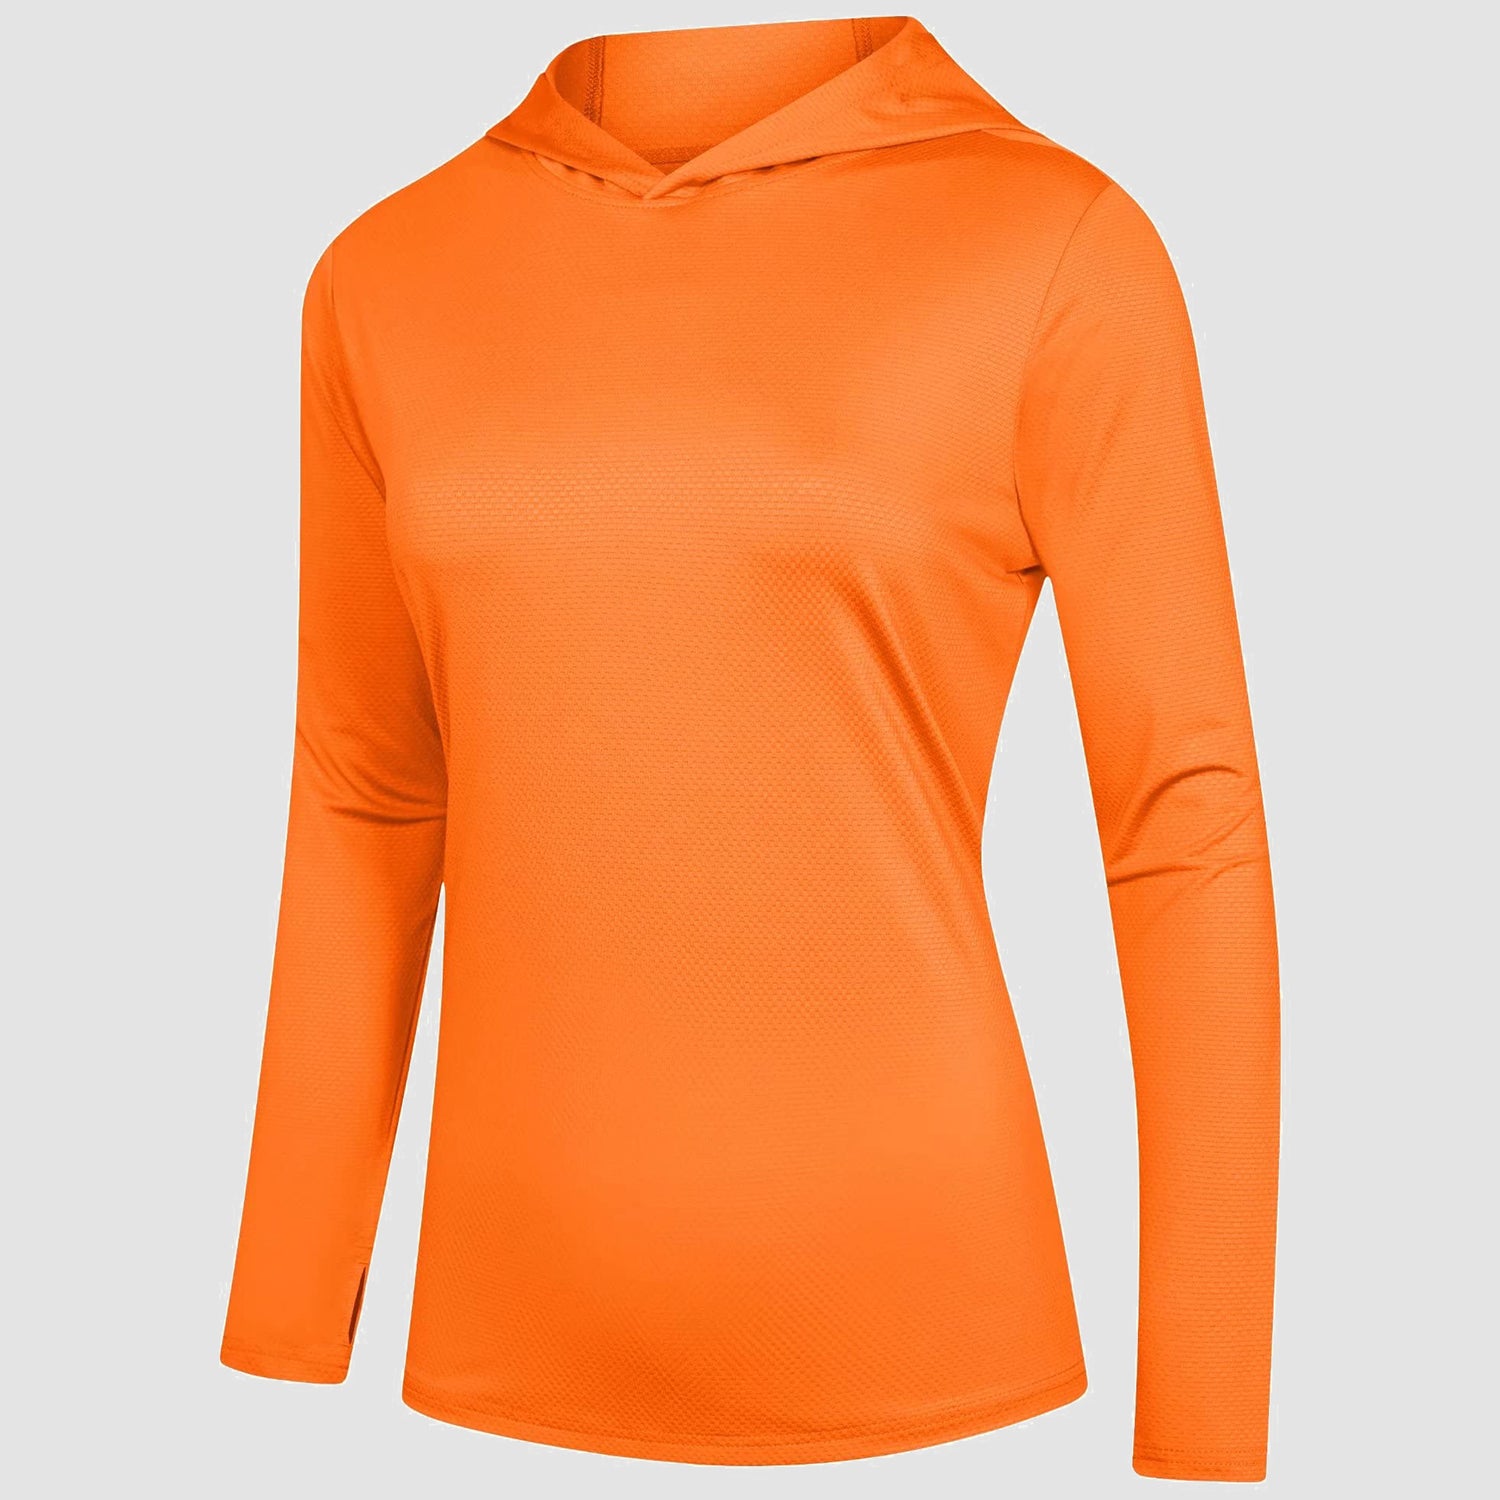 Buy Women's UPF 50+ Sun Shirts UV Protection Long Sleeve Sport